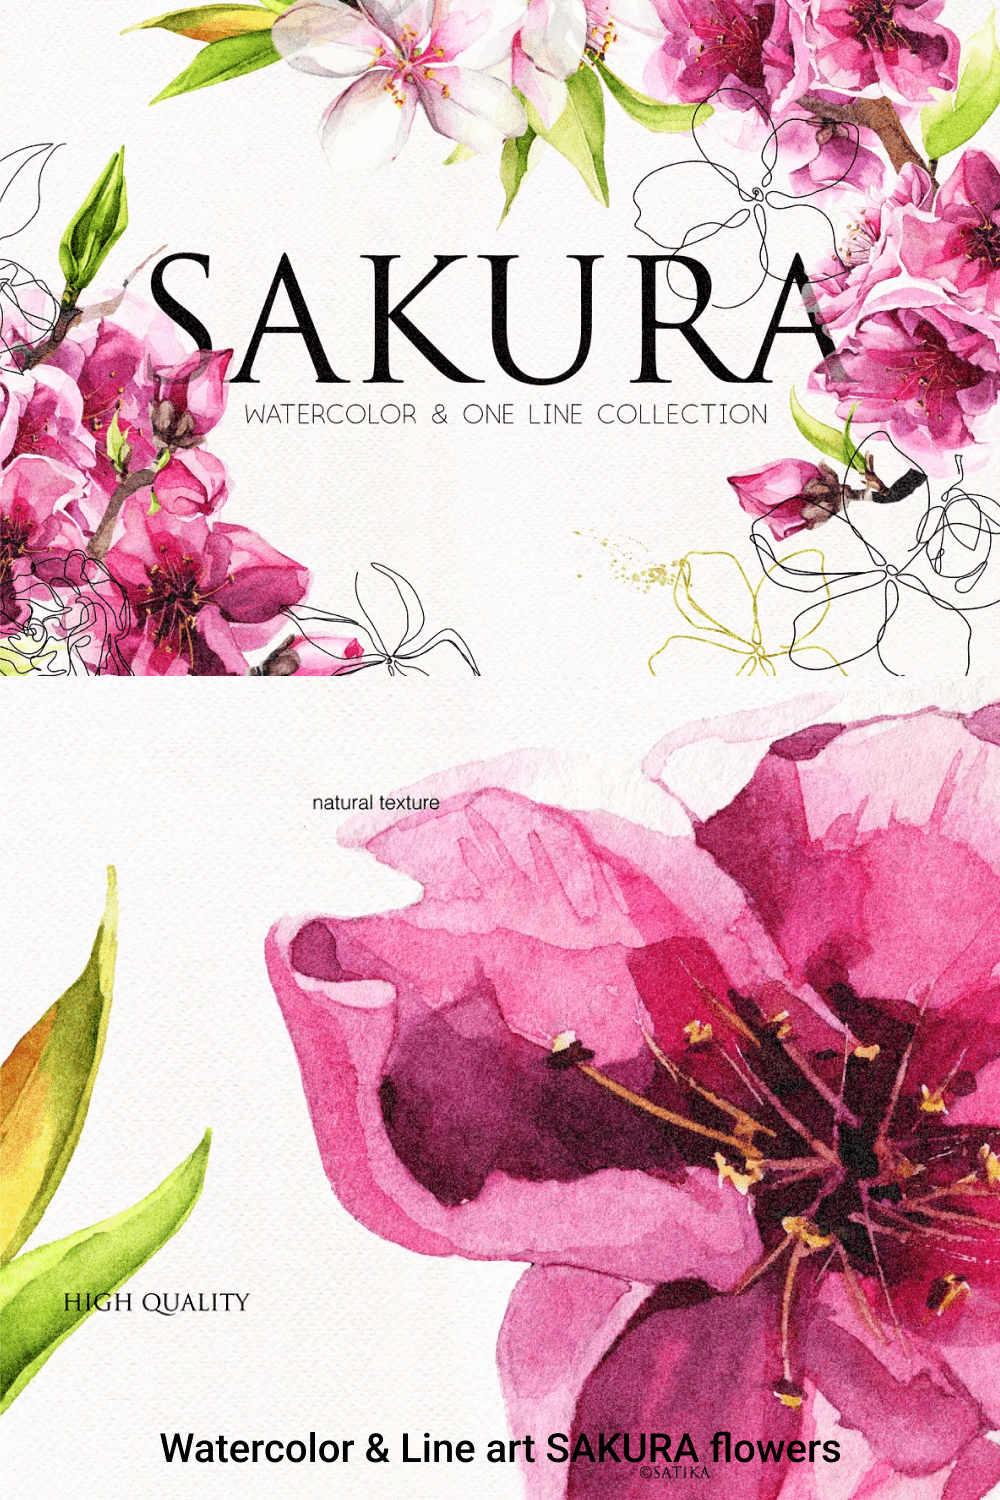 Watercolor line art sakura flowers - pinterest image preview.